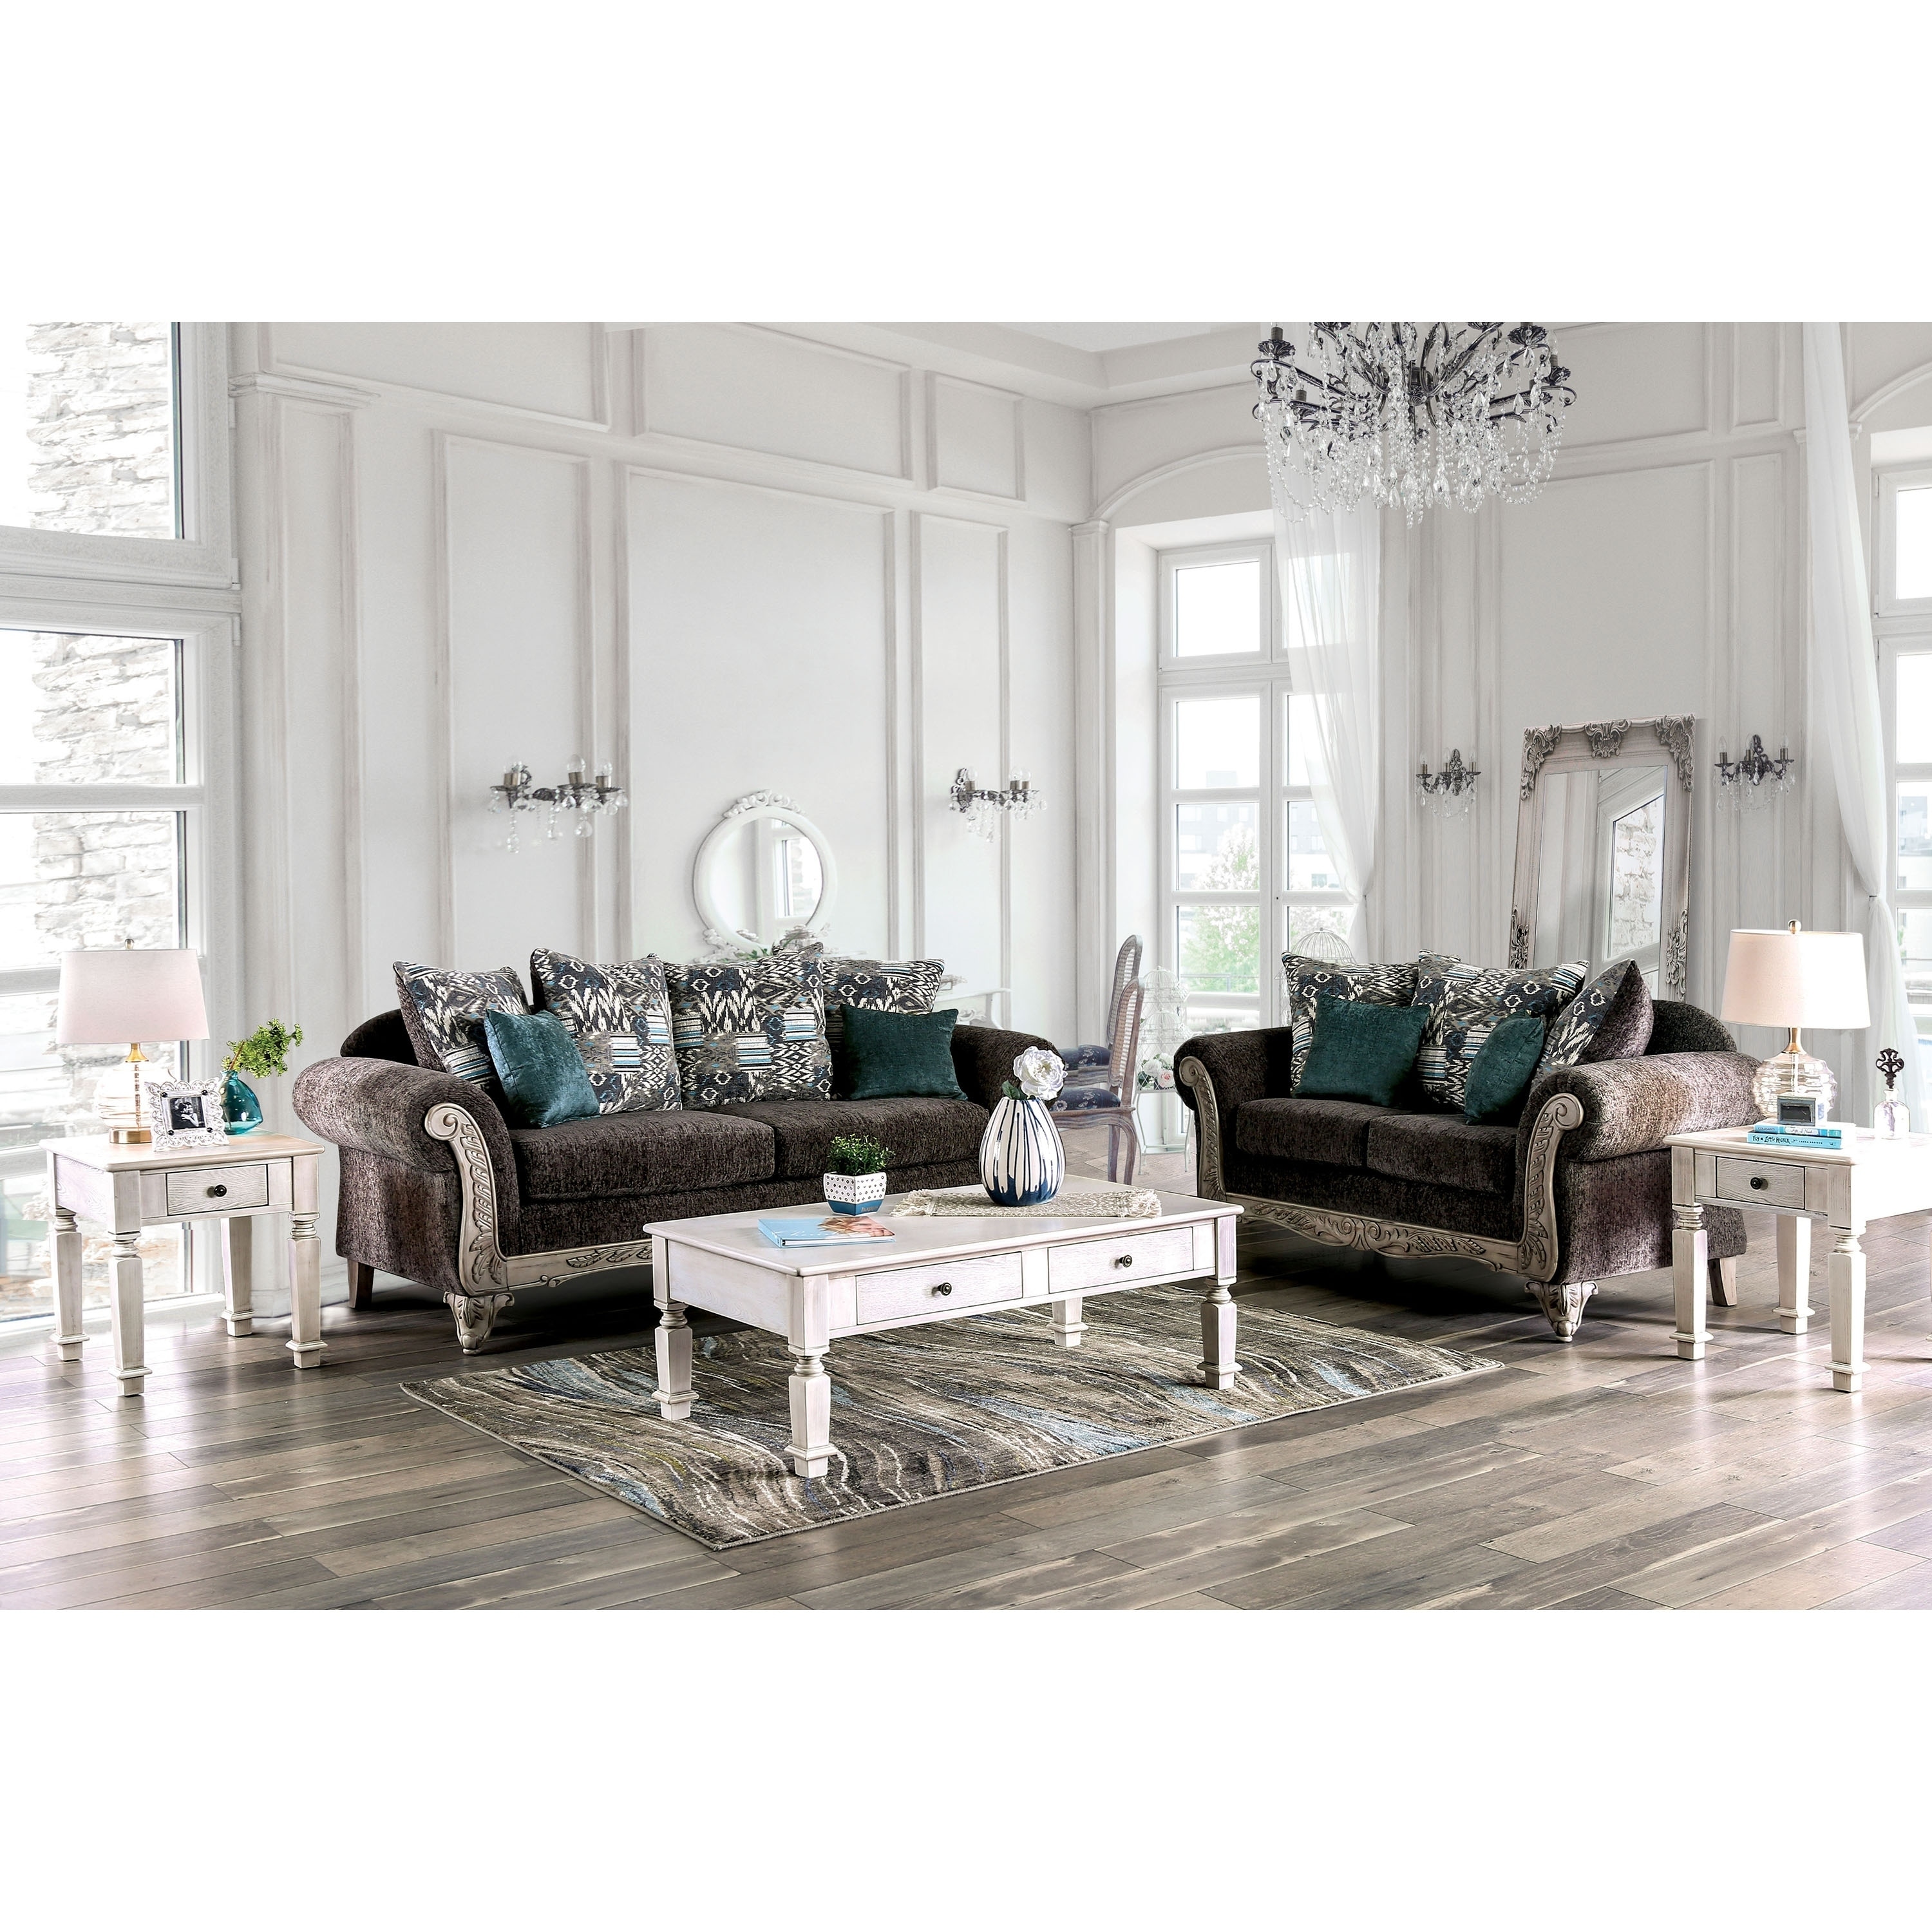 Furniture Of America Tuva Grey Antique White 2 Piece Living Room Set Overstock 30031743